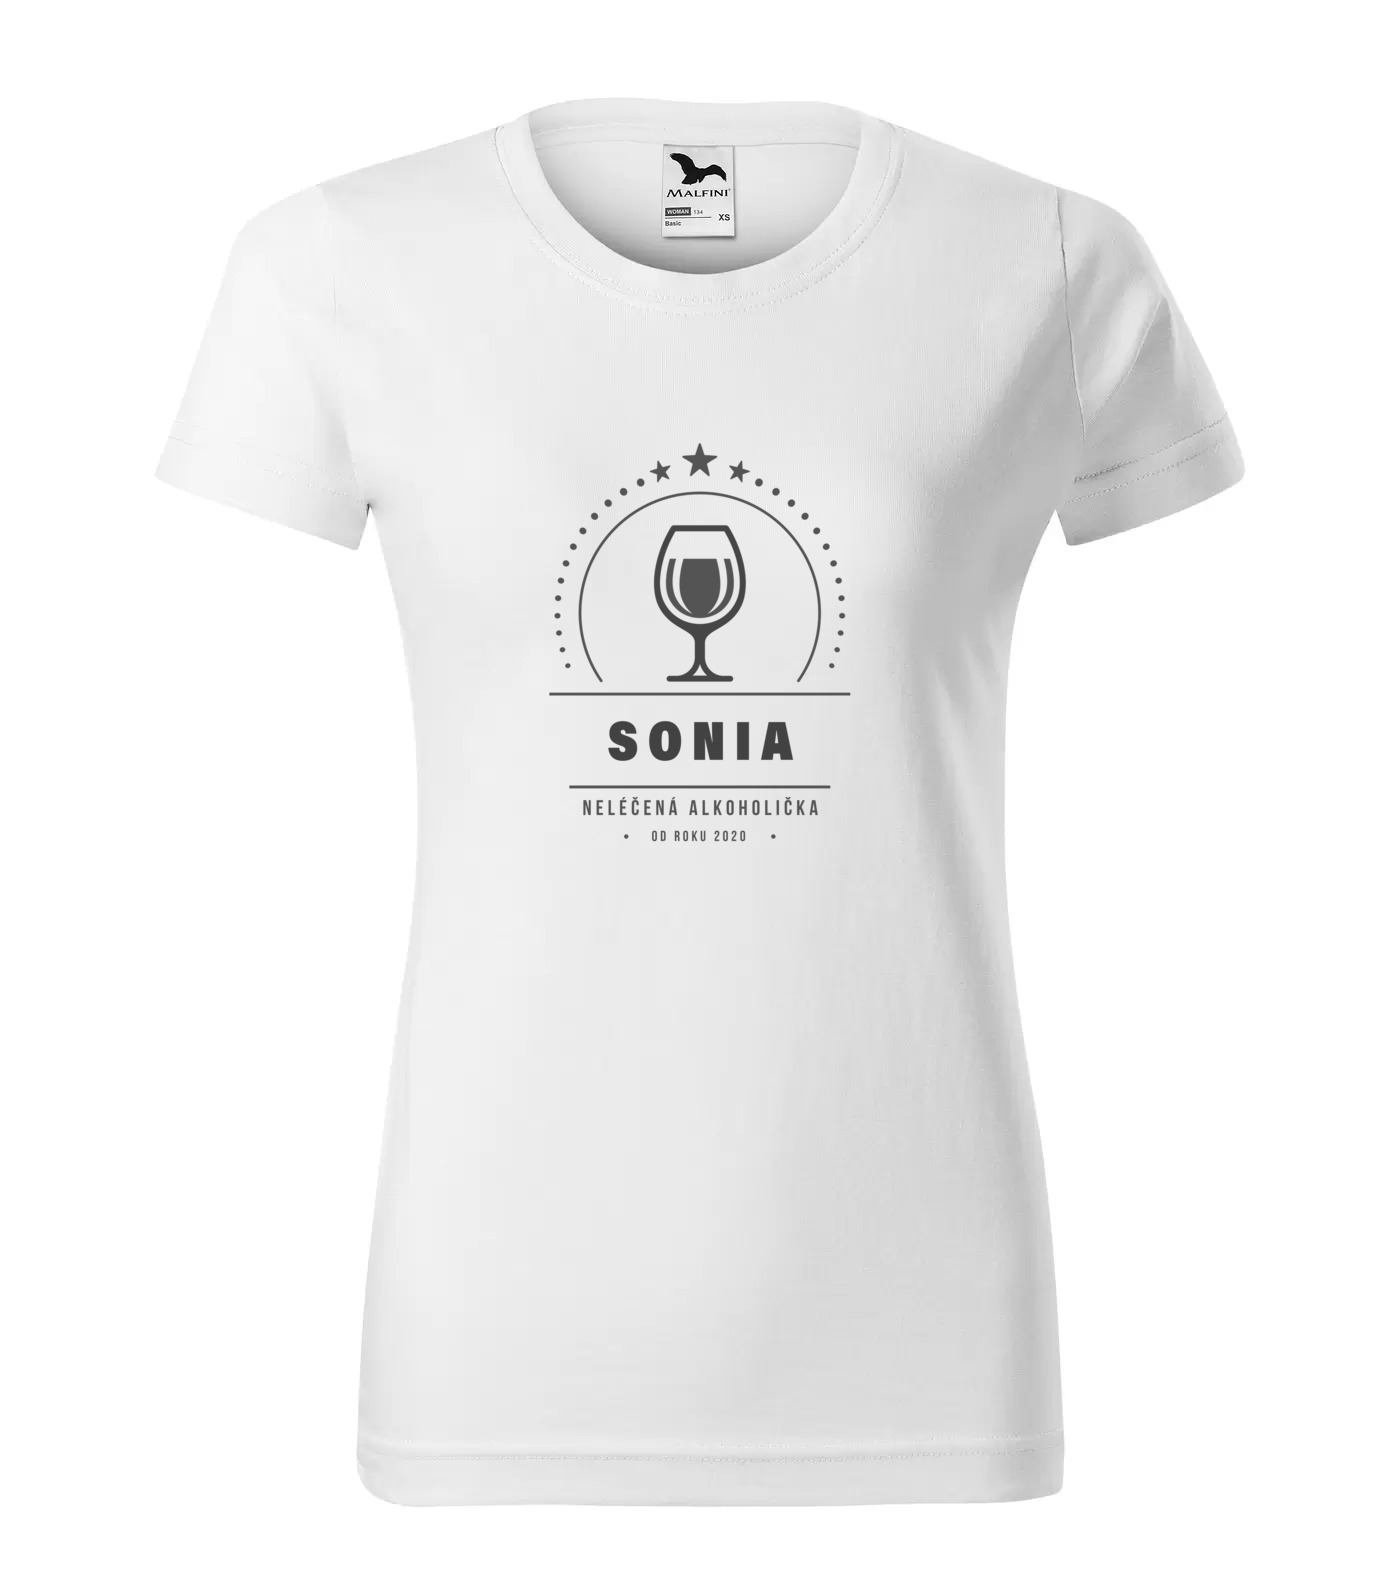 Tričko Alkoholička Sonia